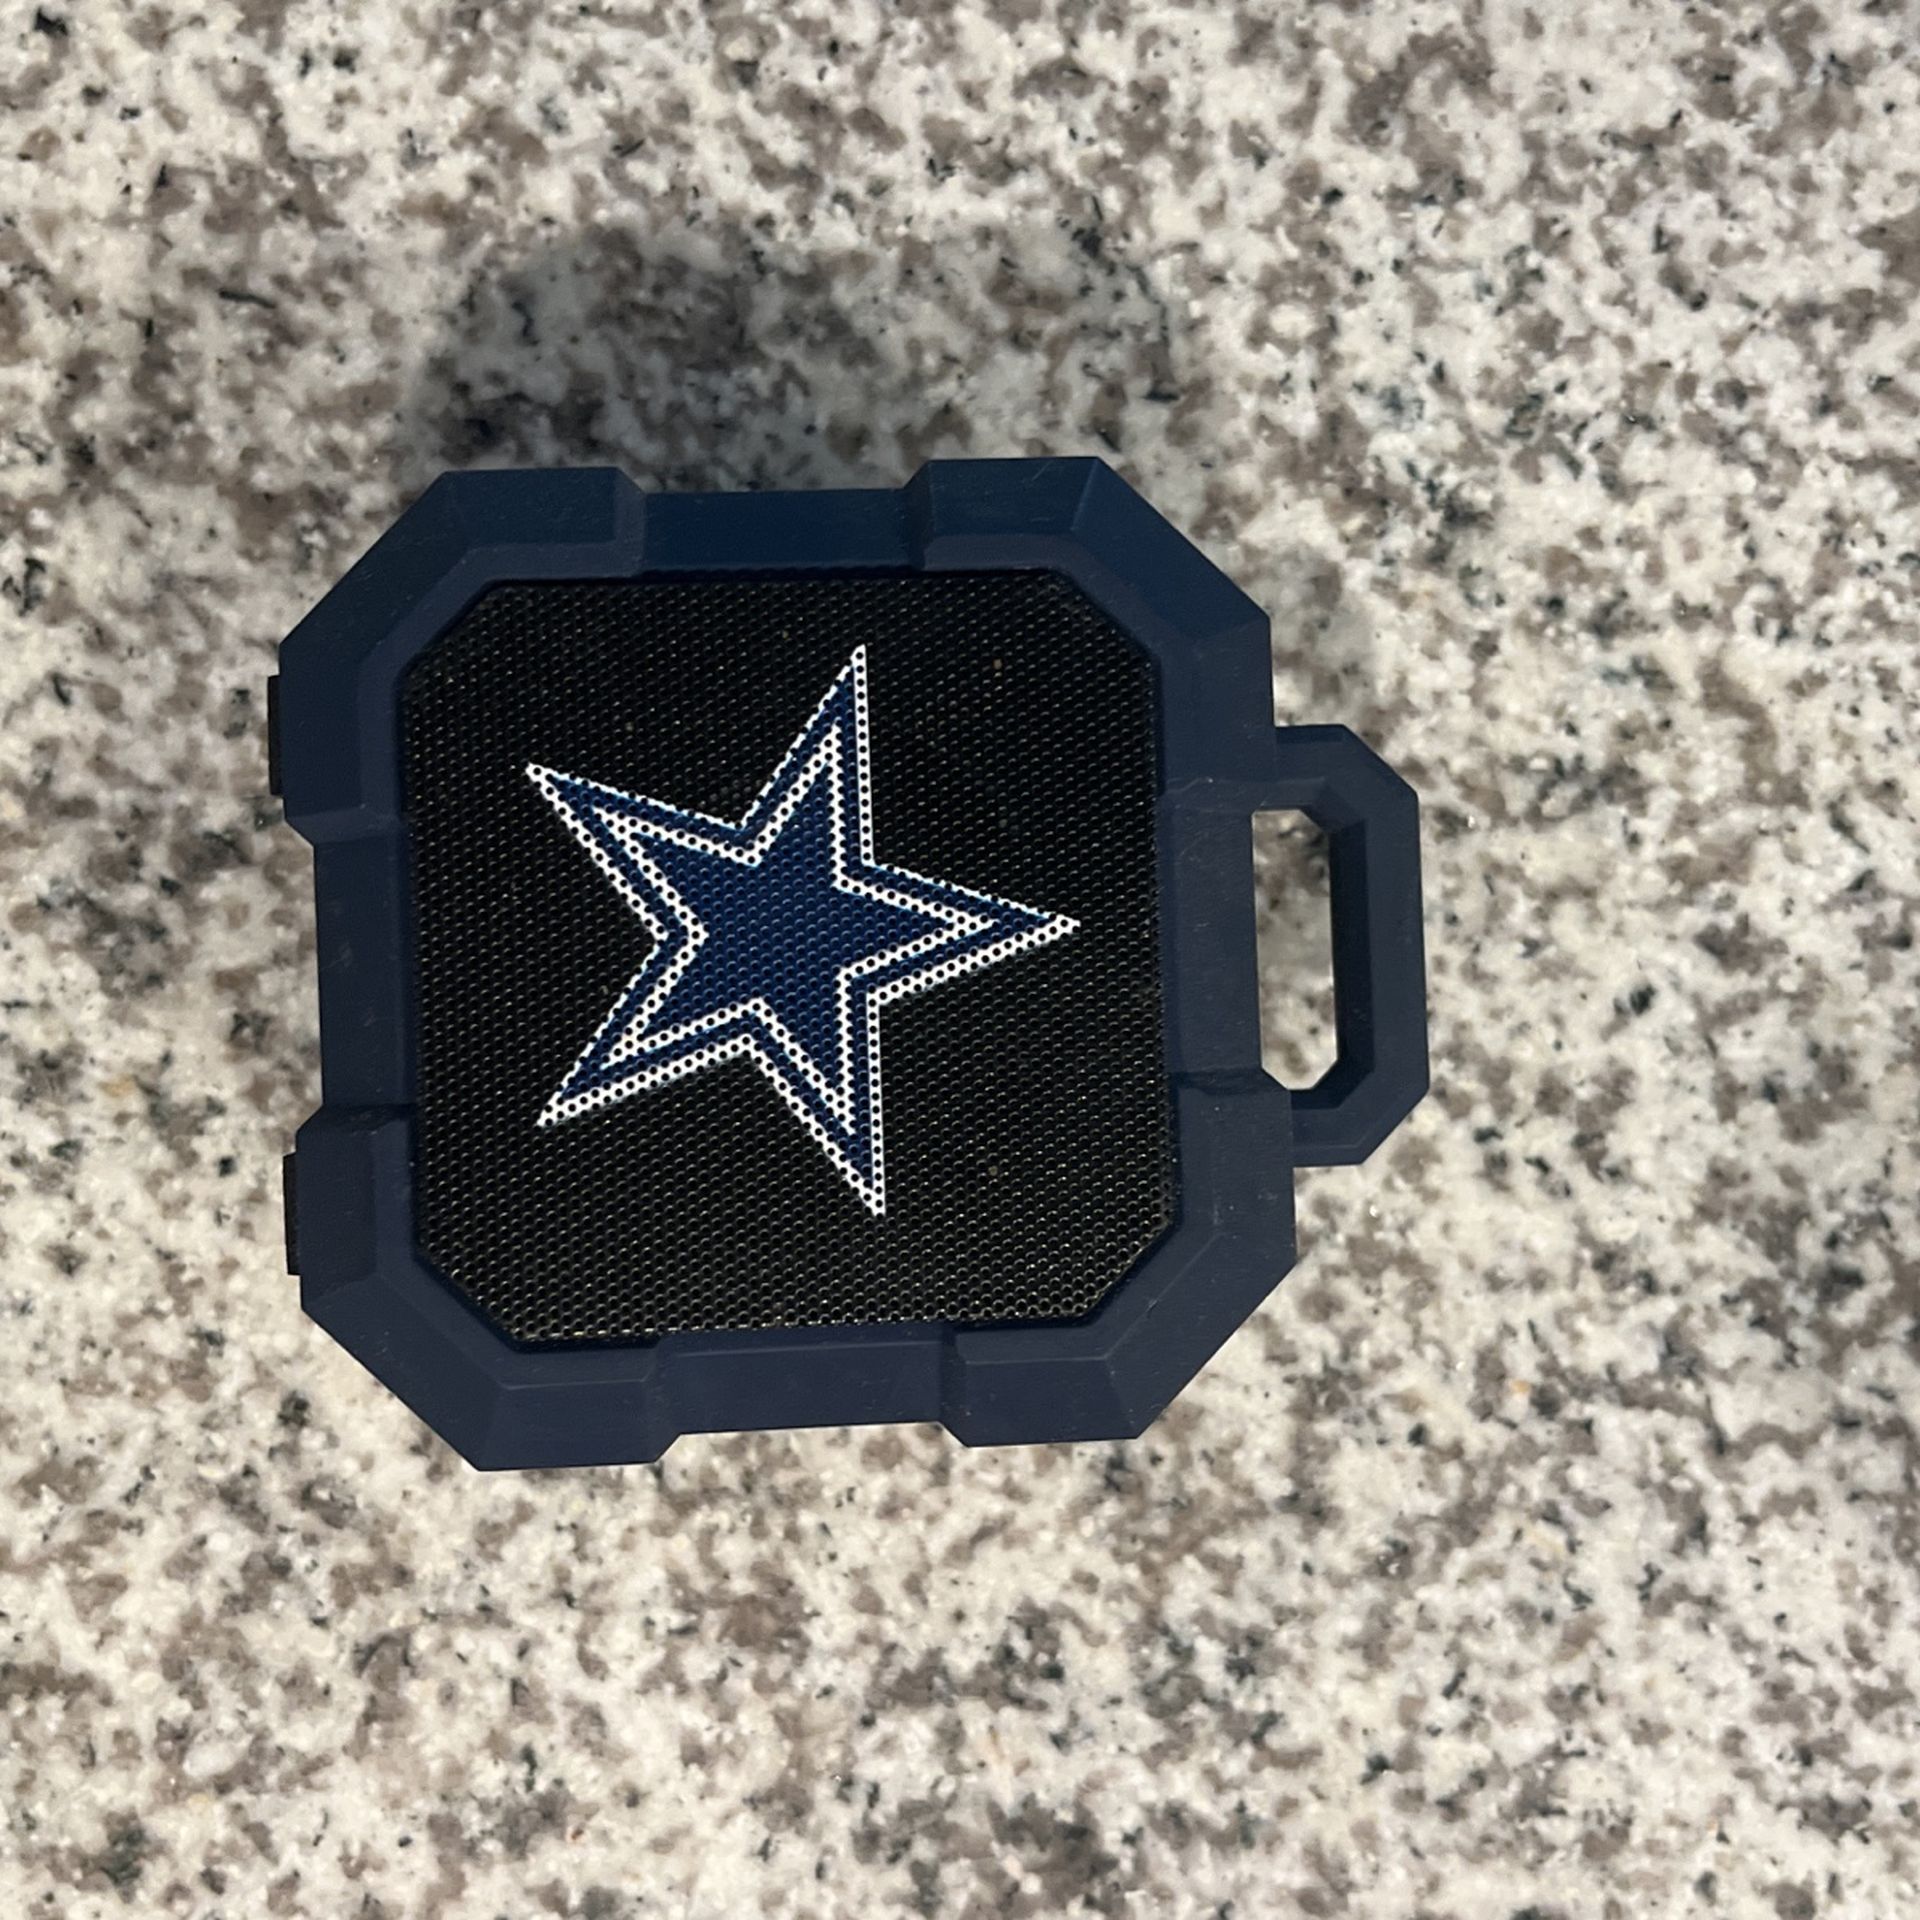 Bluetooth Dallas Cowboys Speaker